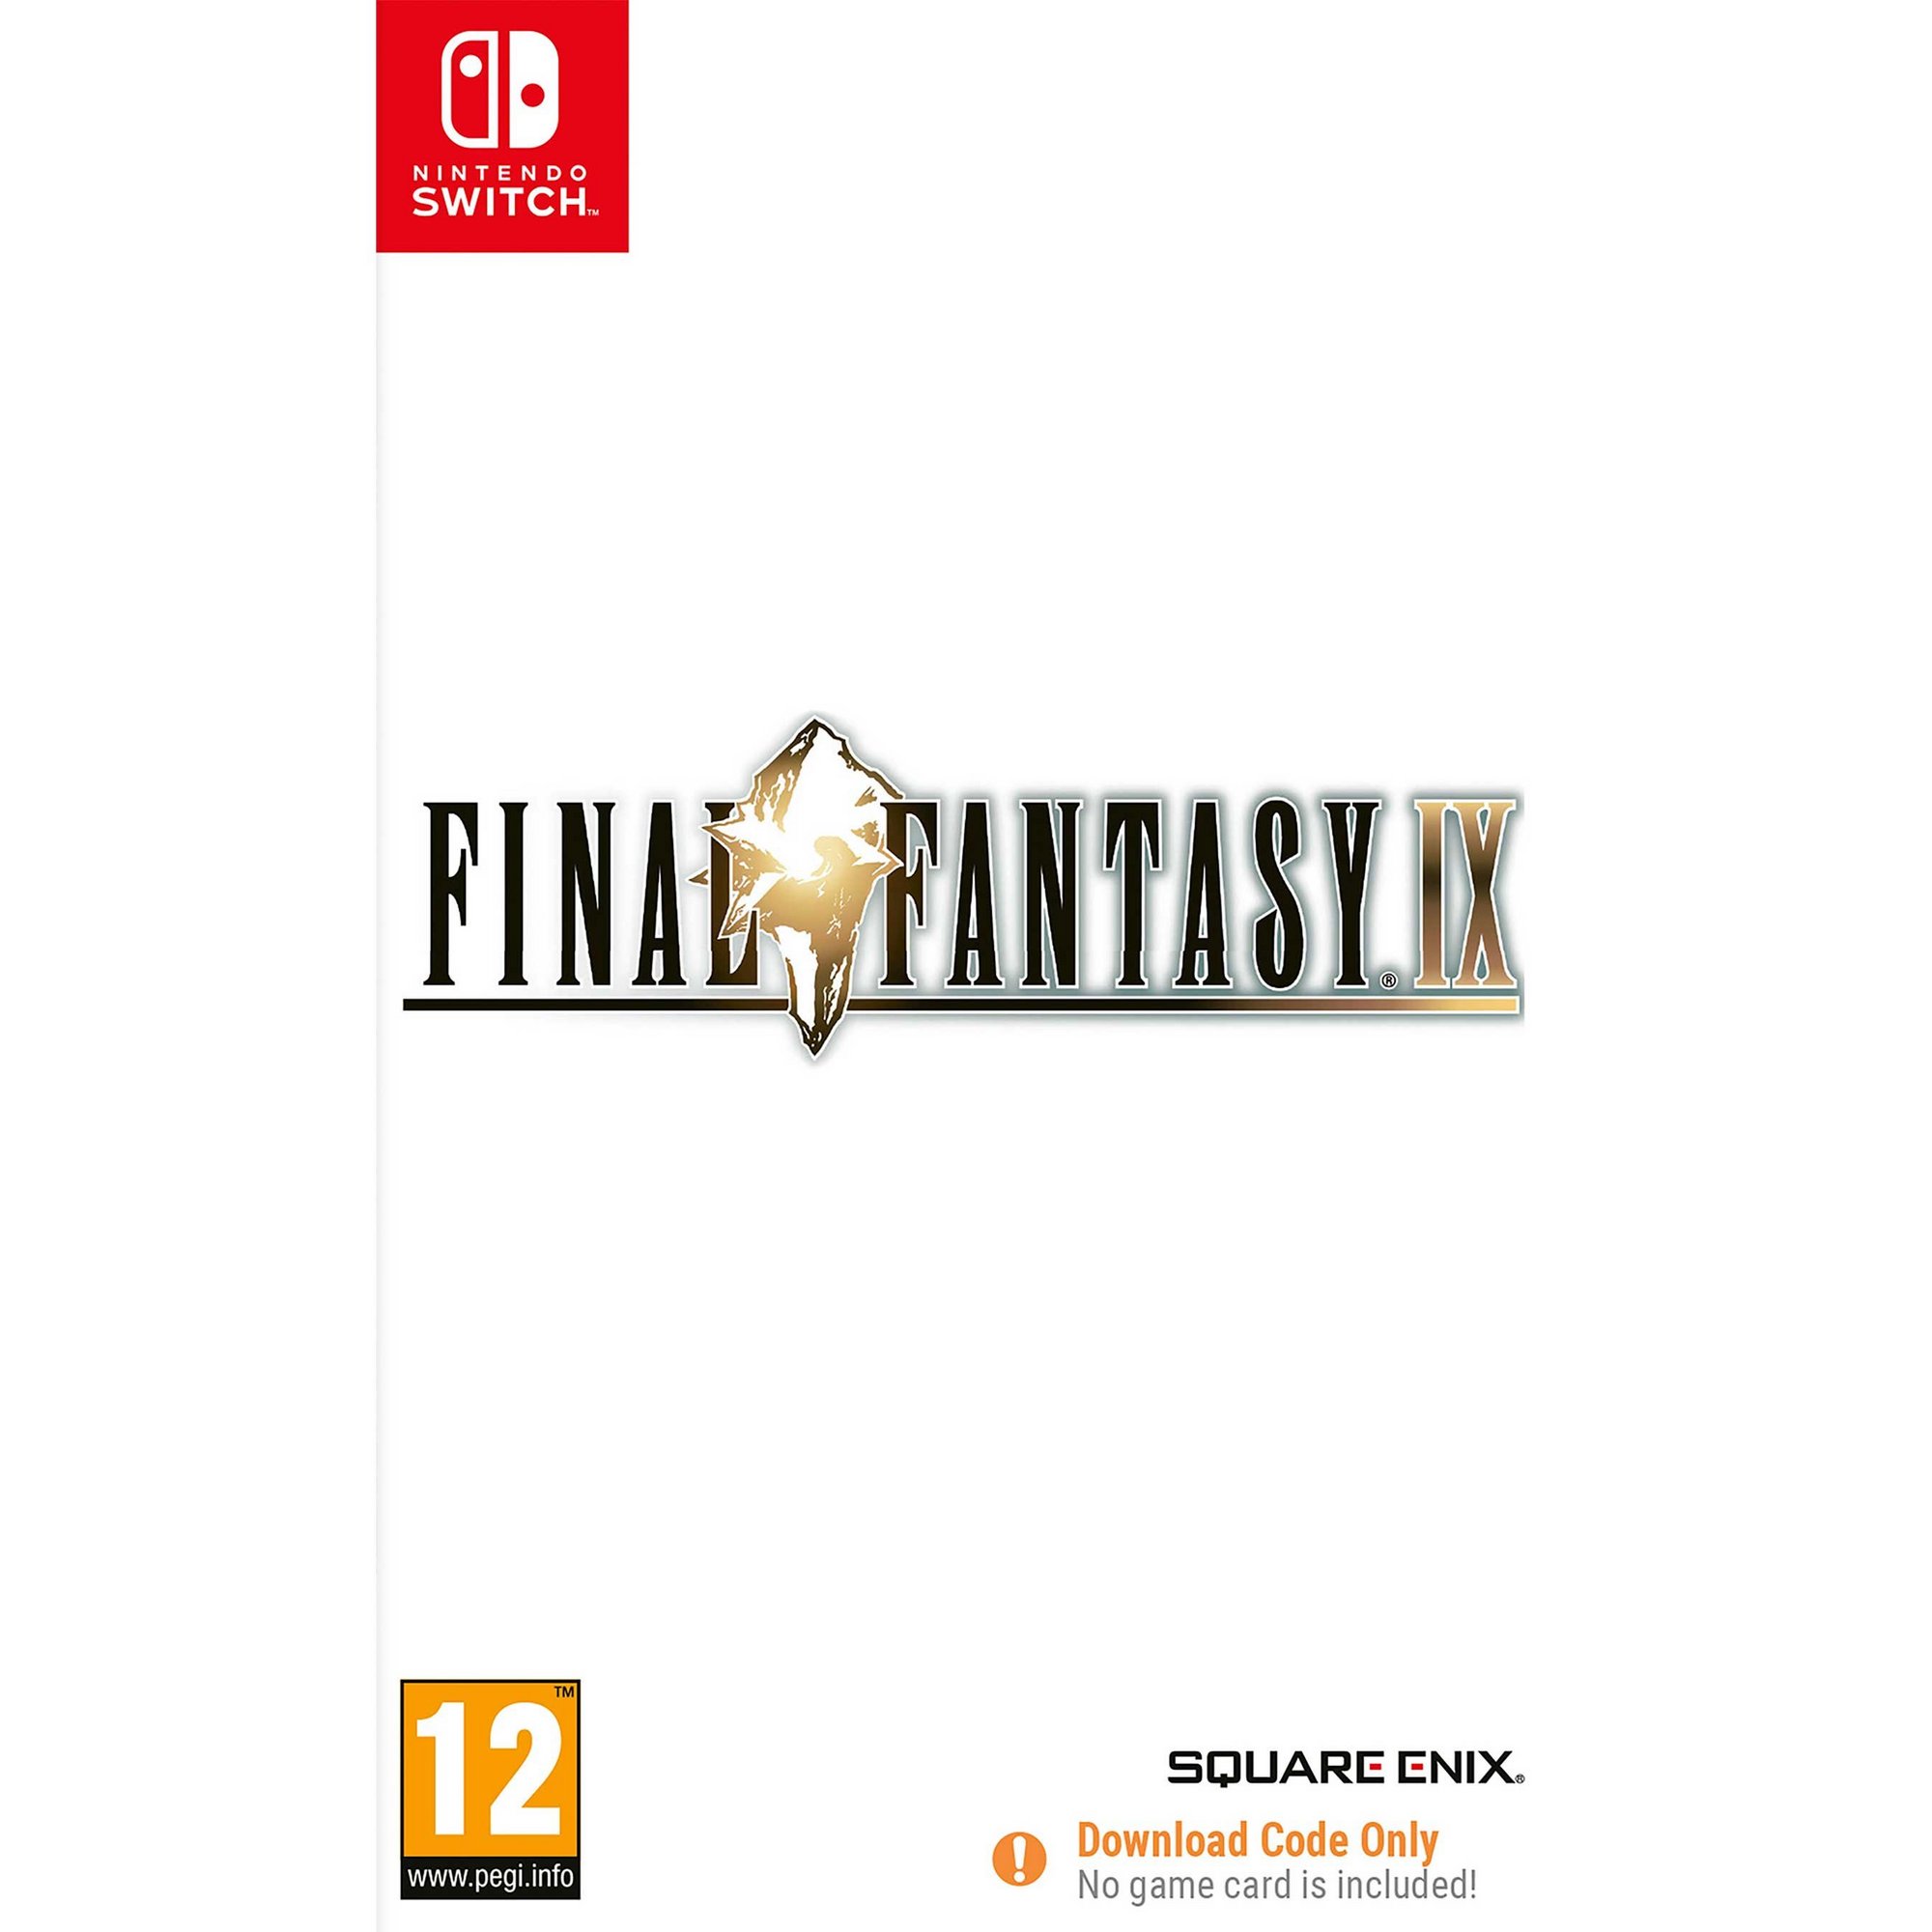 Nintendo Switch: Final Fantasy IX